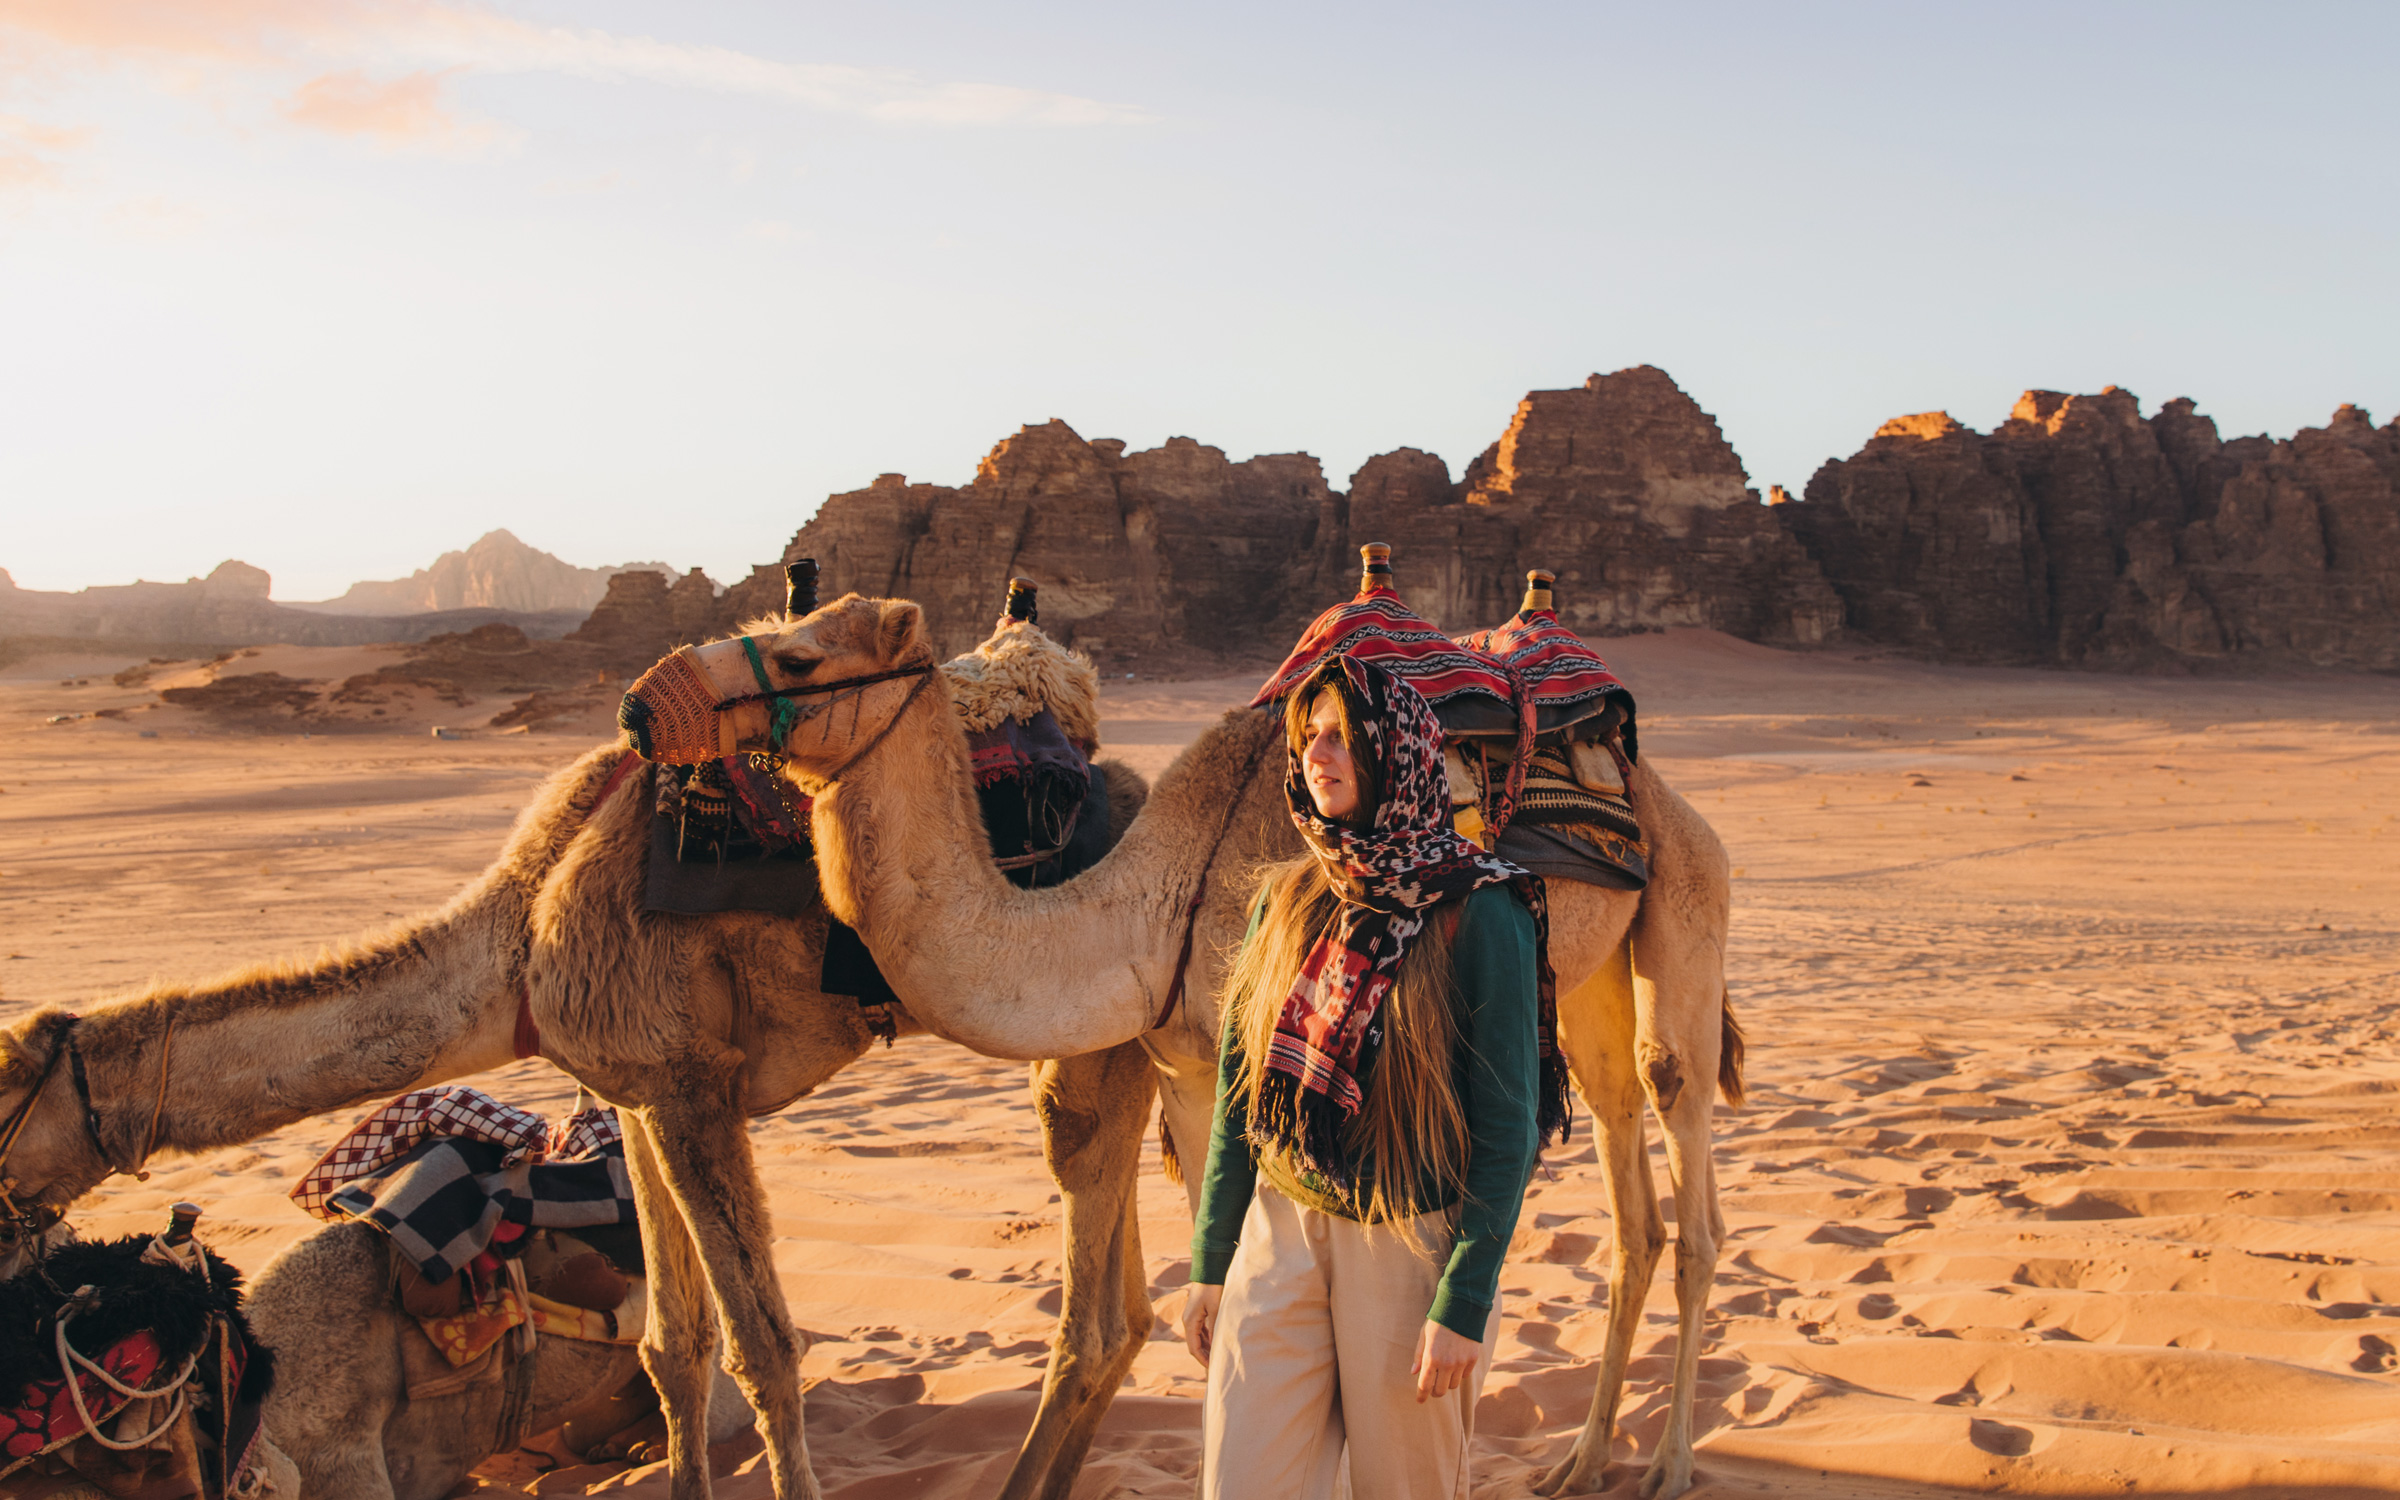 Desert camel ride - Bedouin Trails